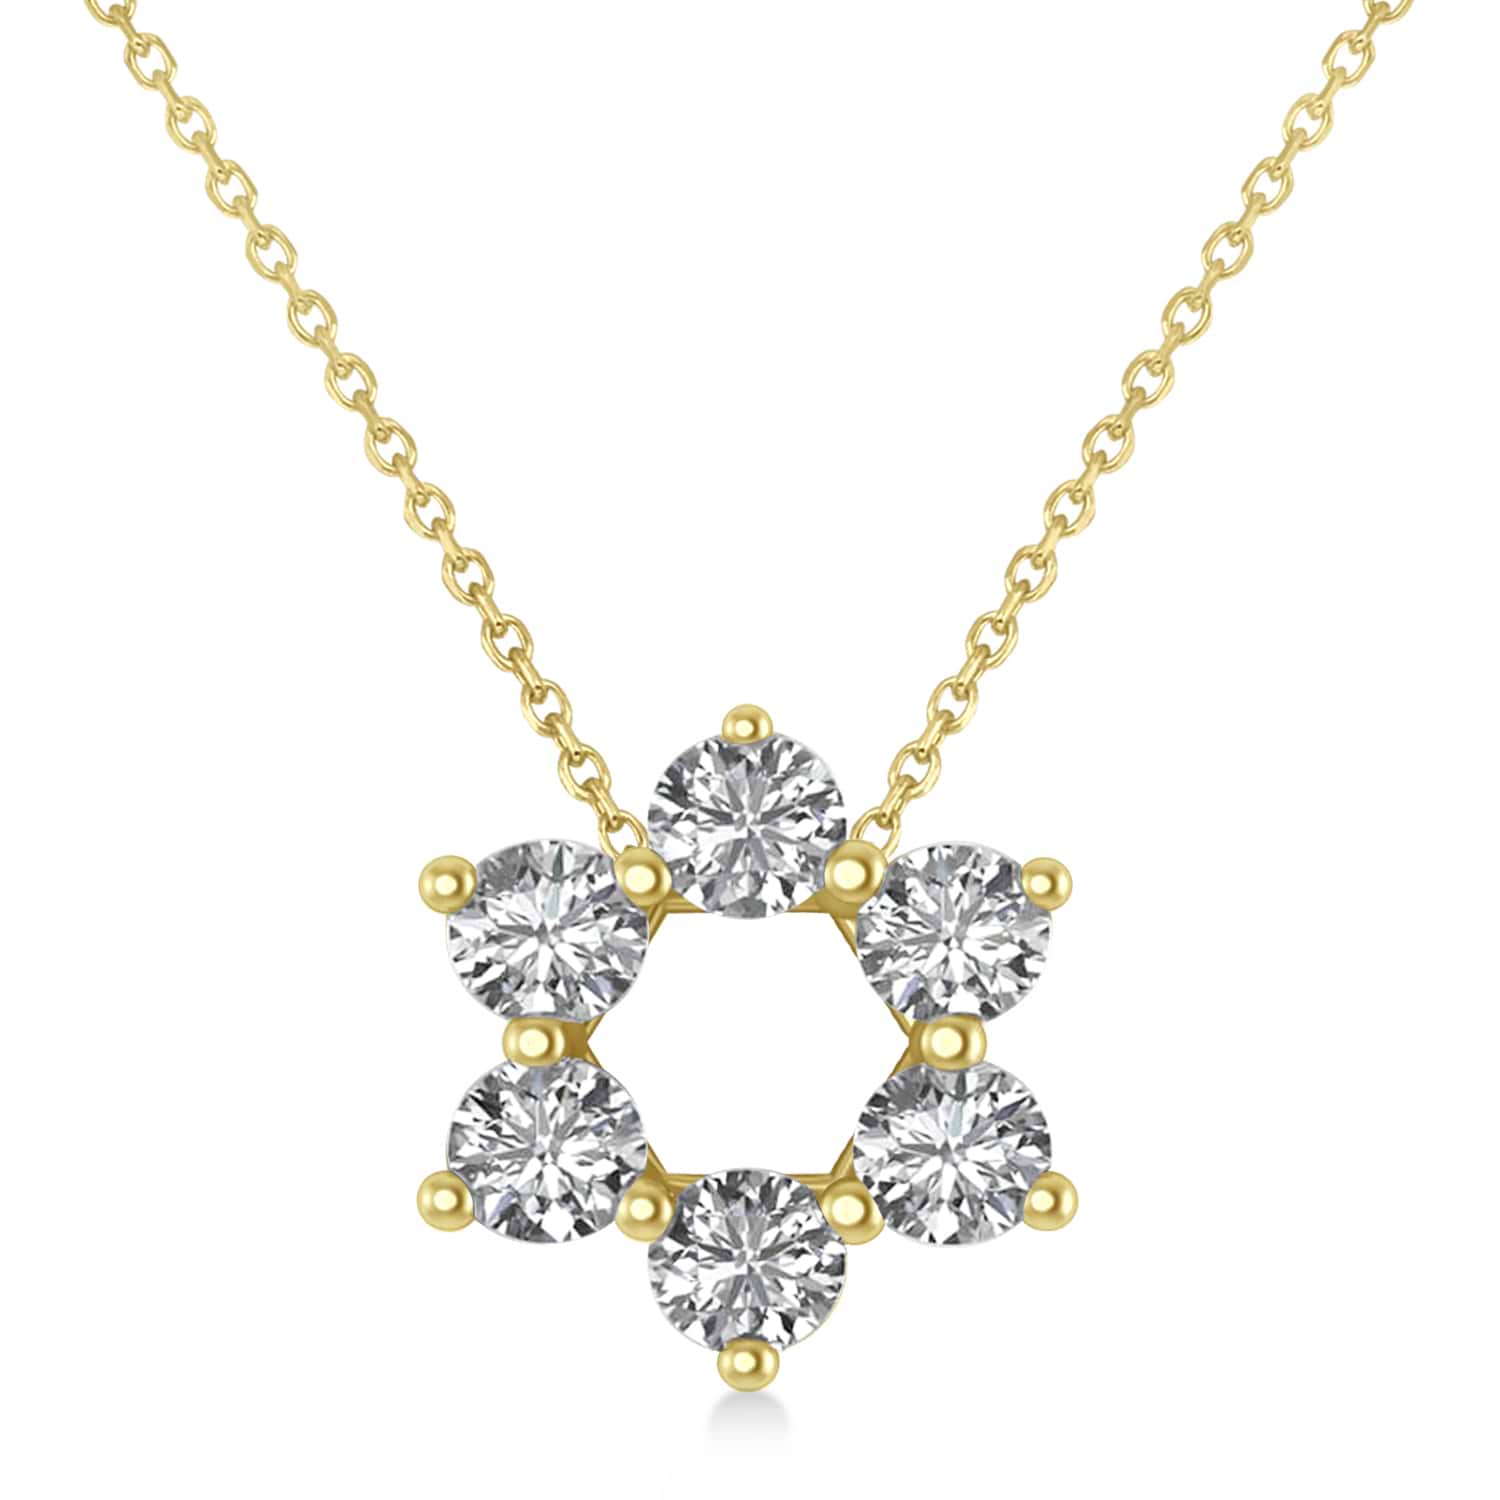 Jewish Star of David Diamond Pendant Necklace 14K Yellow Gold (0.60ct)